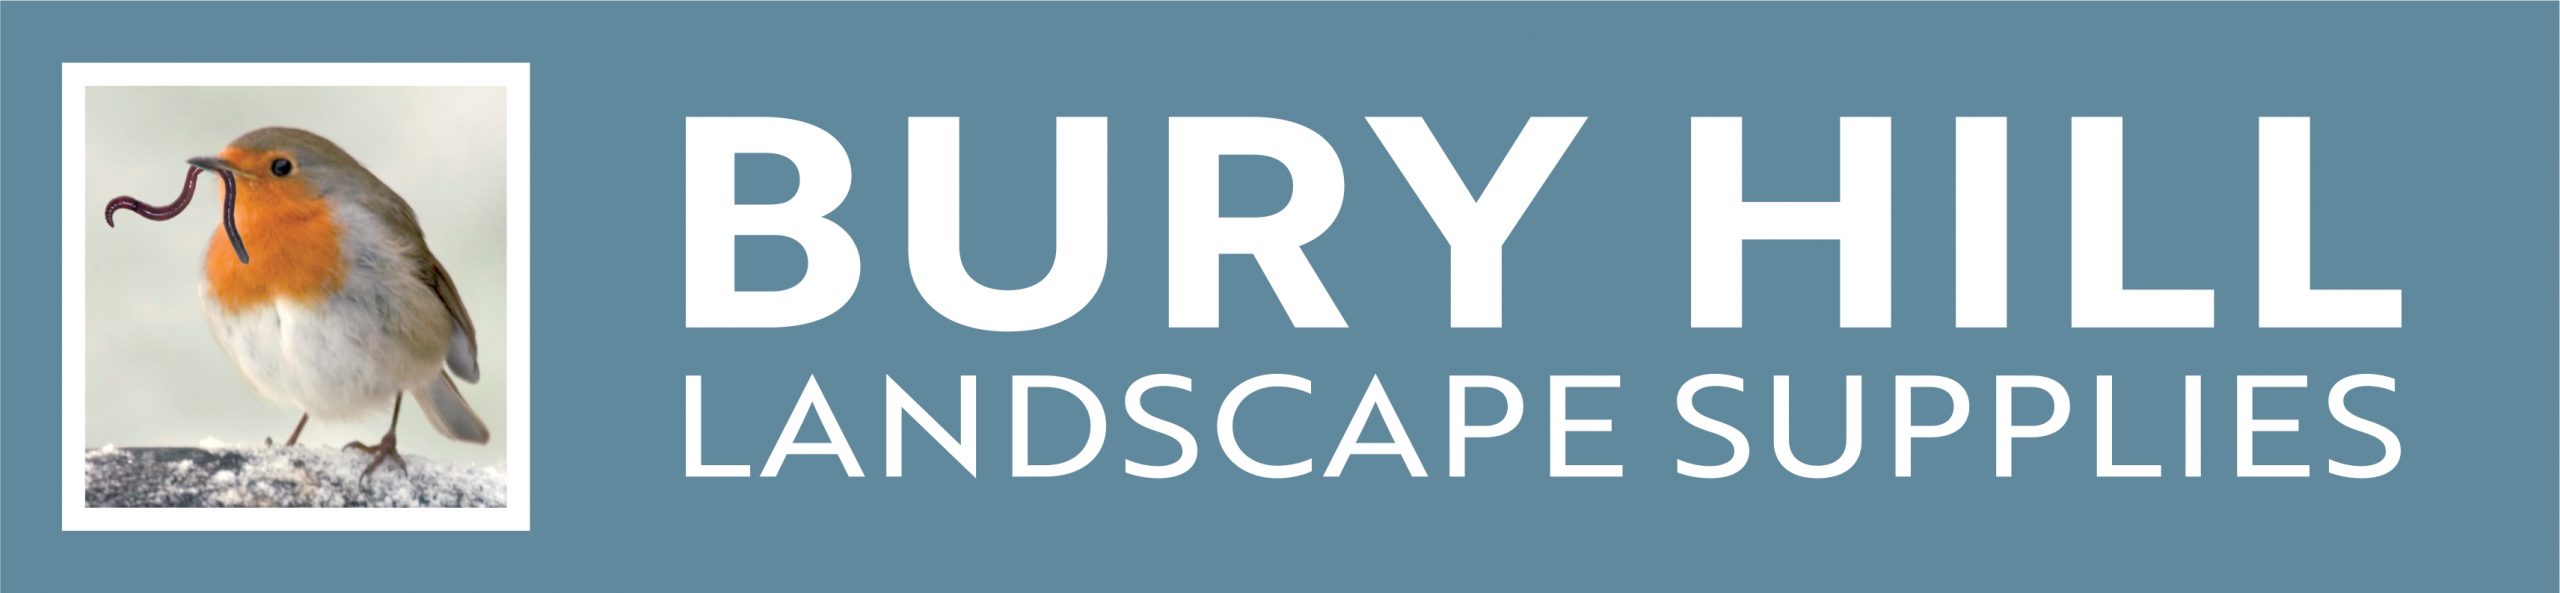 Bury Hill Landscape Supplies